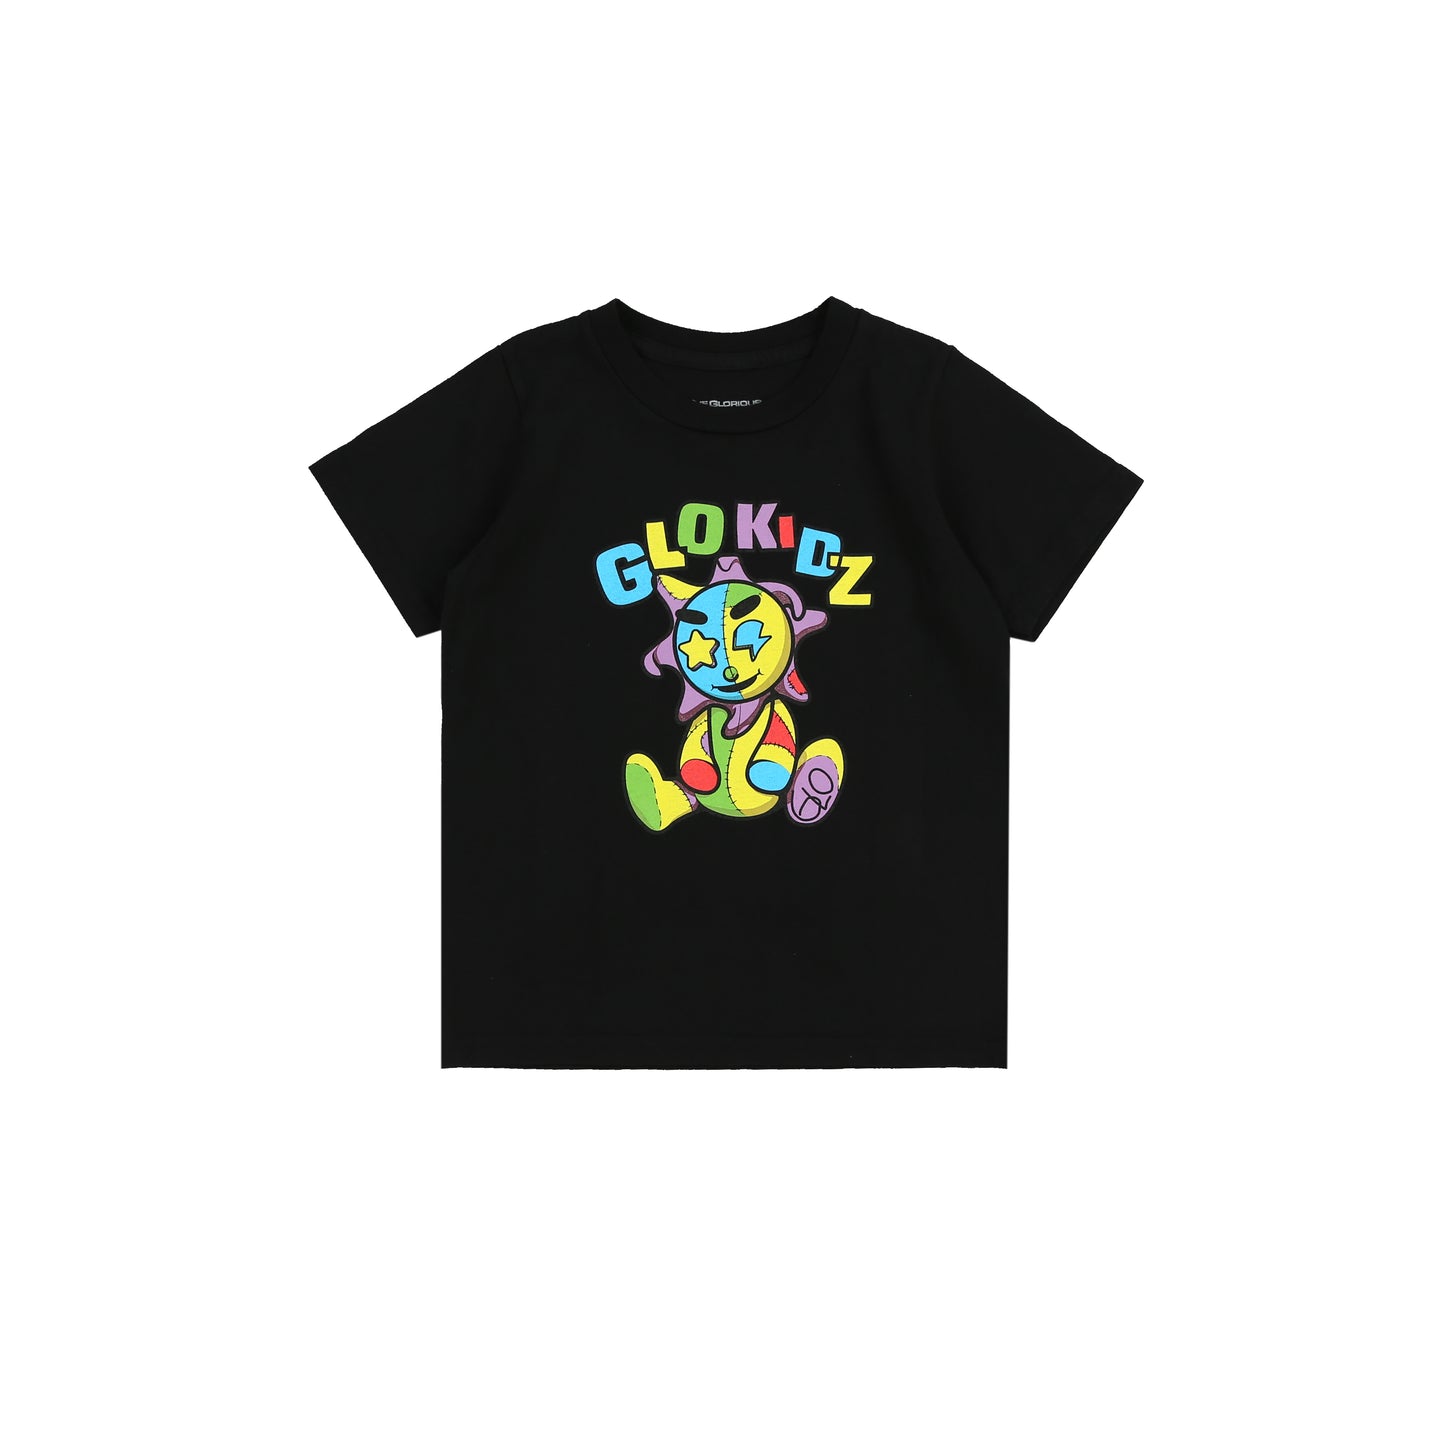 Glo Kidz Ragdoll Kids Shirt (Black)